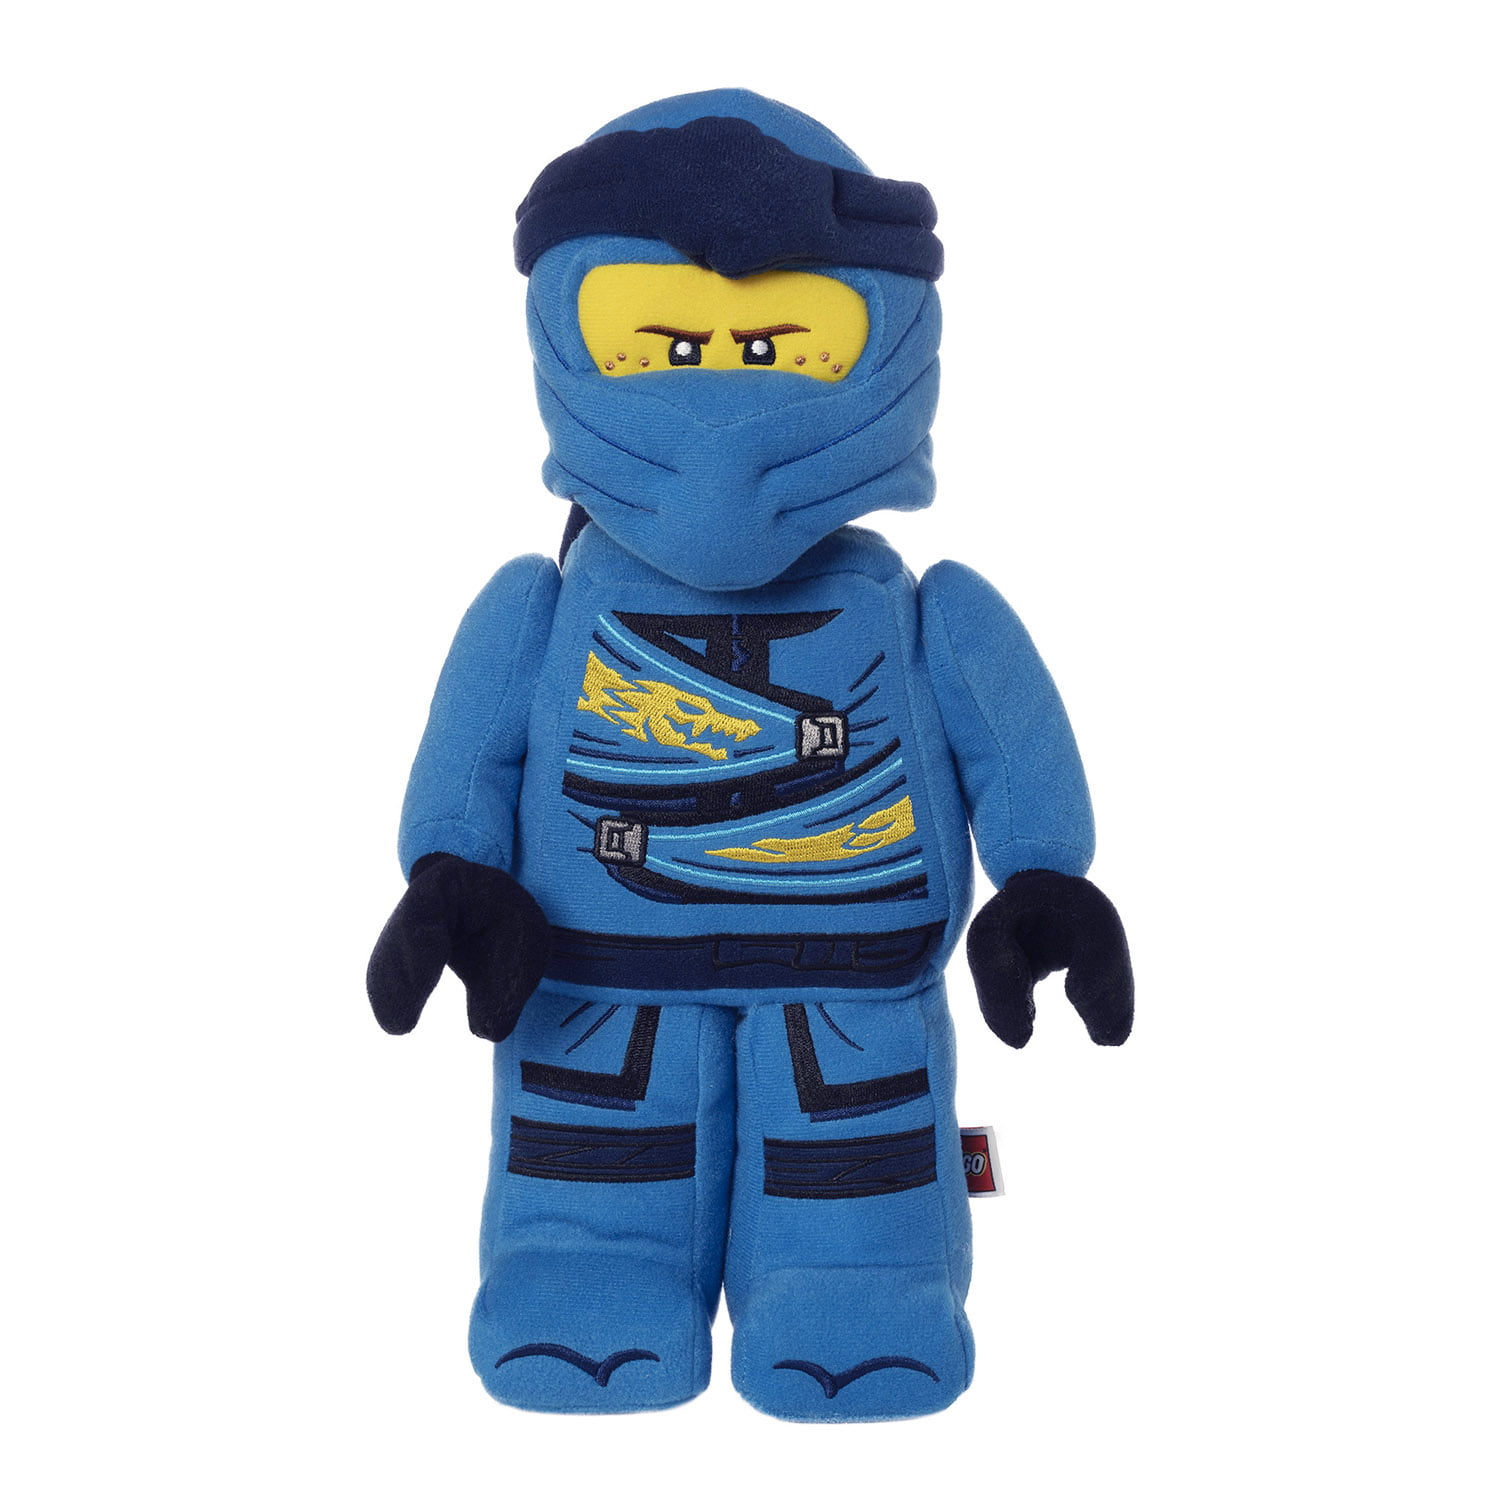 LEGO Kids Ninjago The Legendary Ninja and Master of Fire Costume Tee